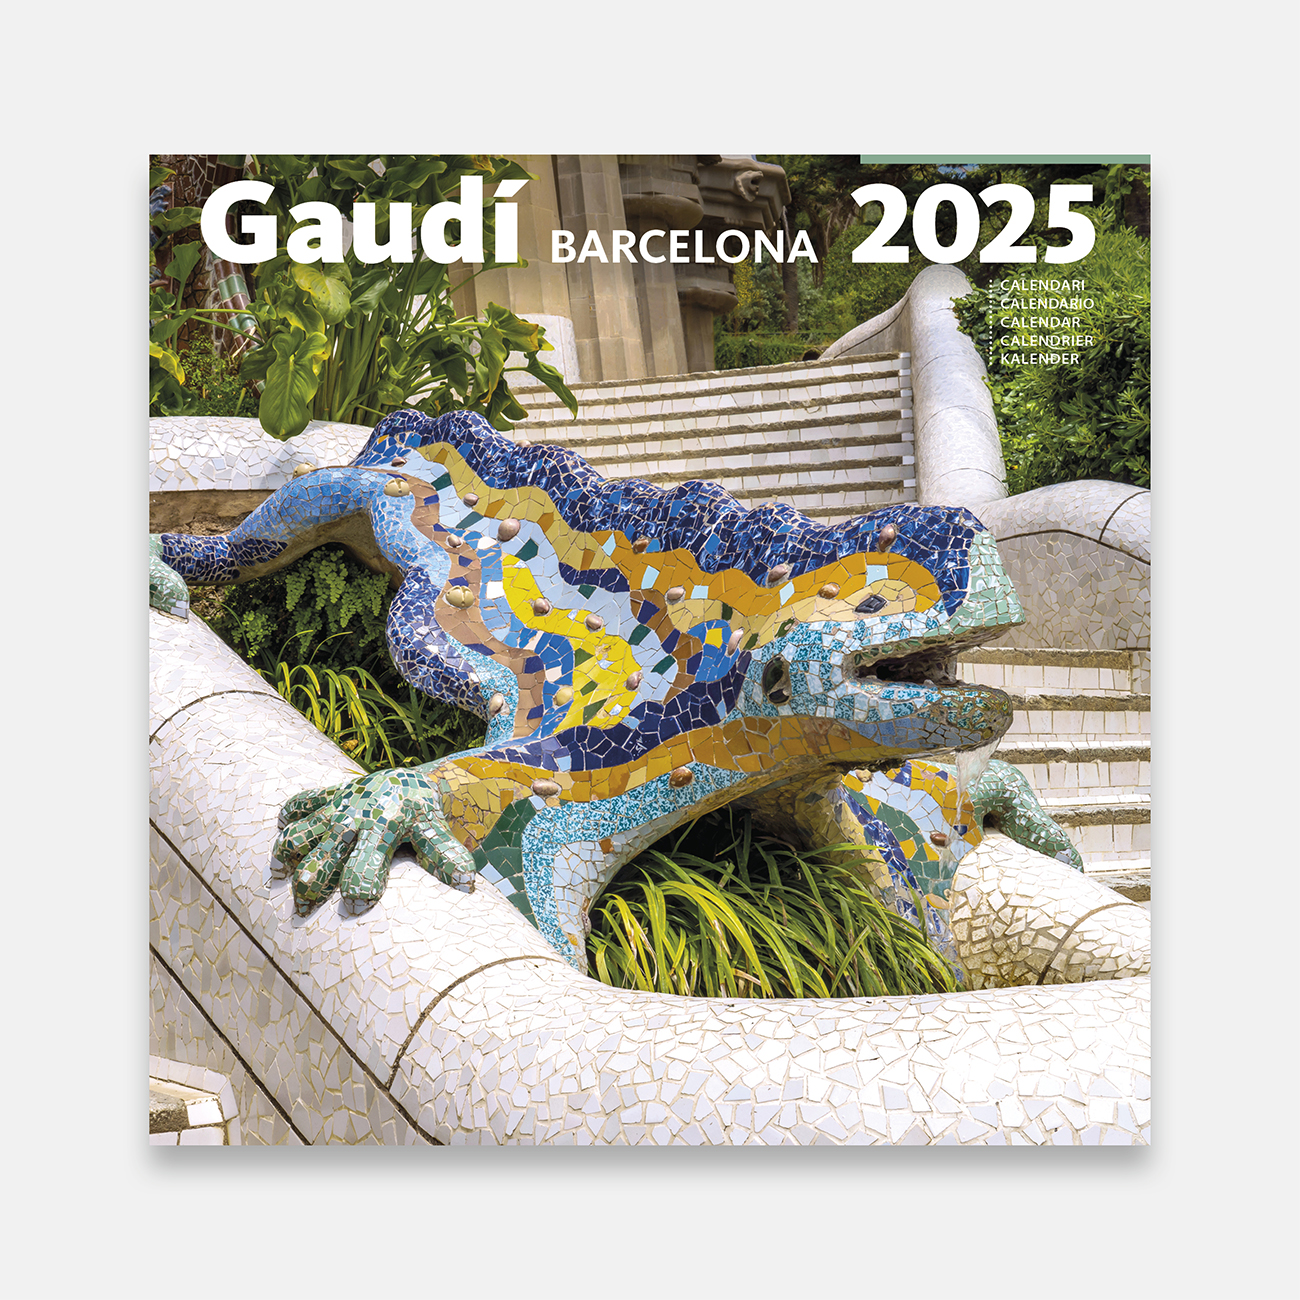 Calendari 2025 Gaudí (Park Güell) 25g2 a calendario pared 2025 gaudi park guell